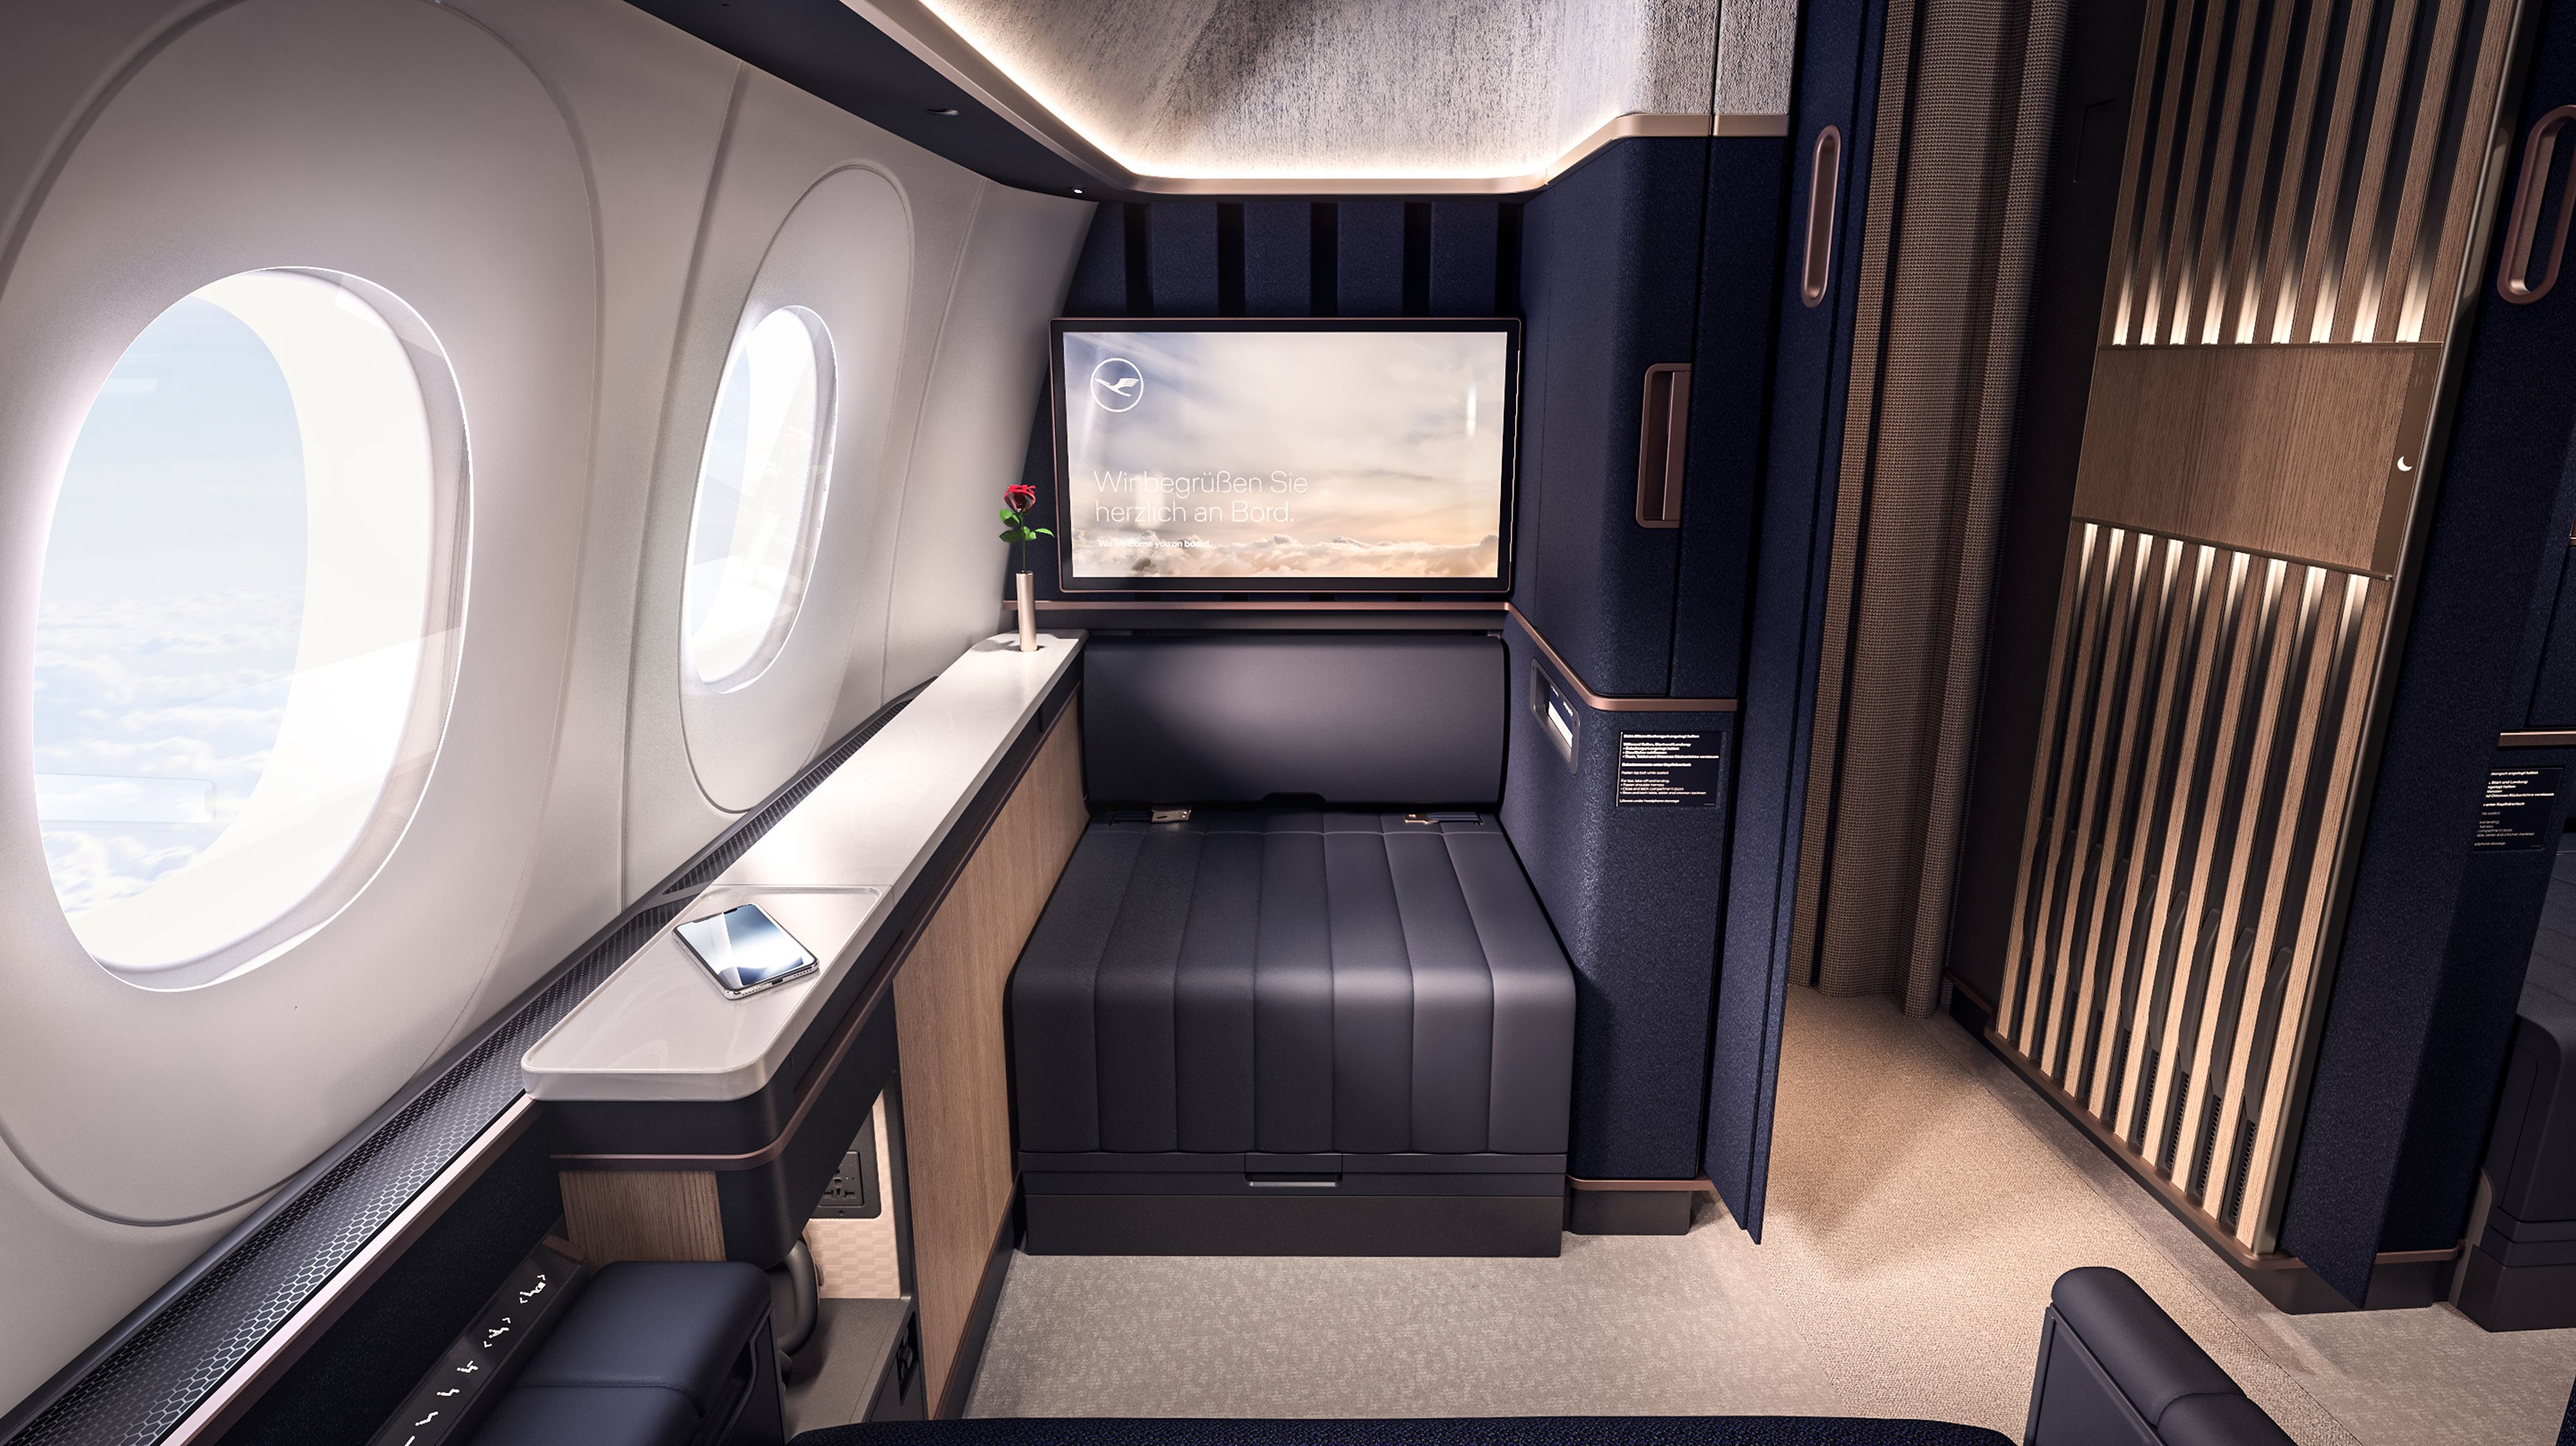 Lufthansa business class suite under Allegris program